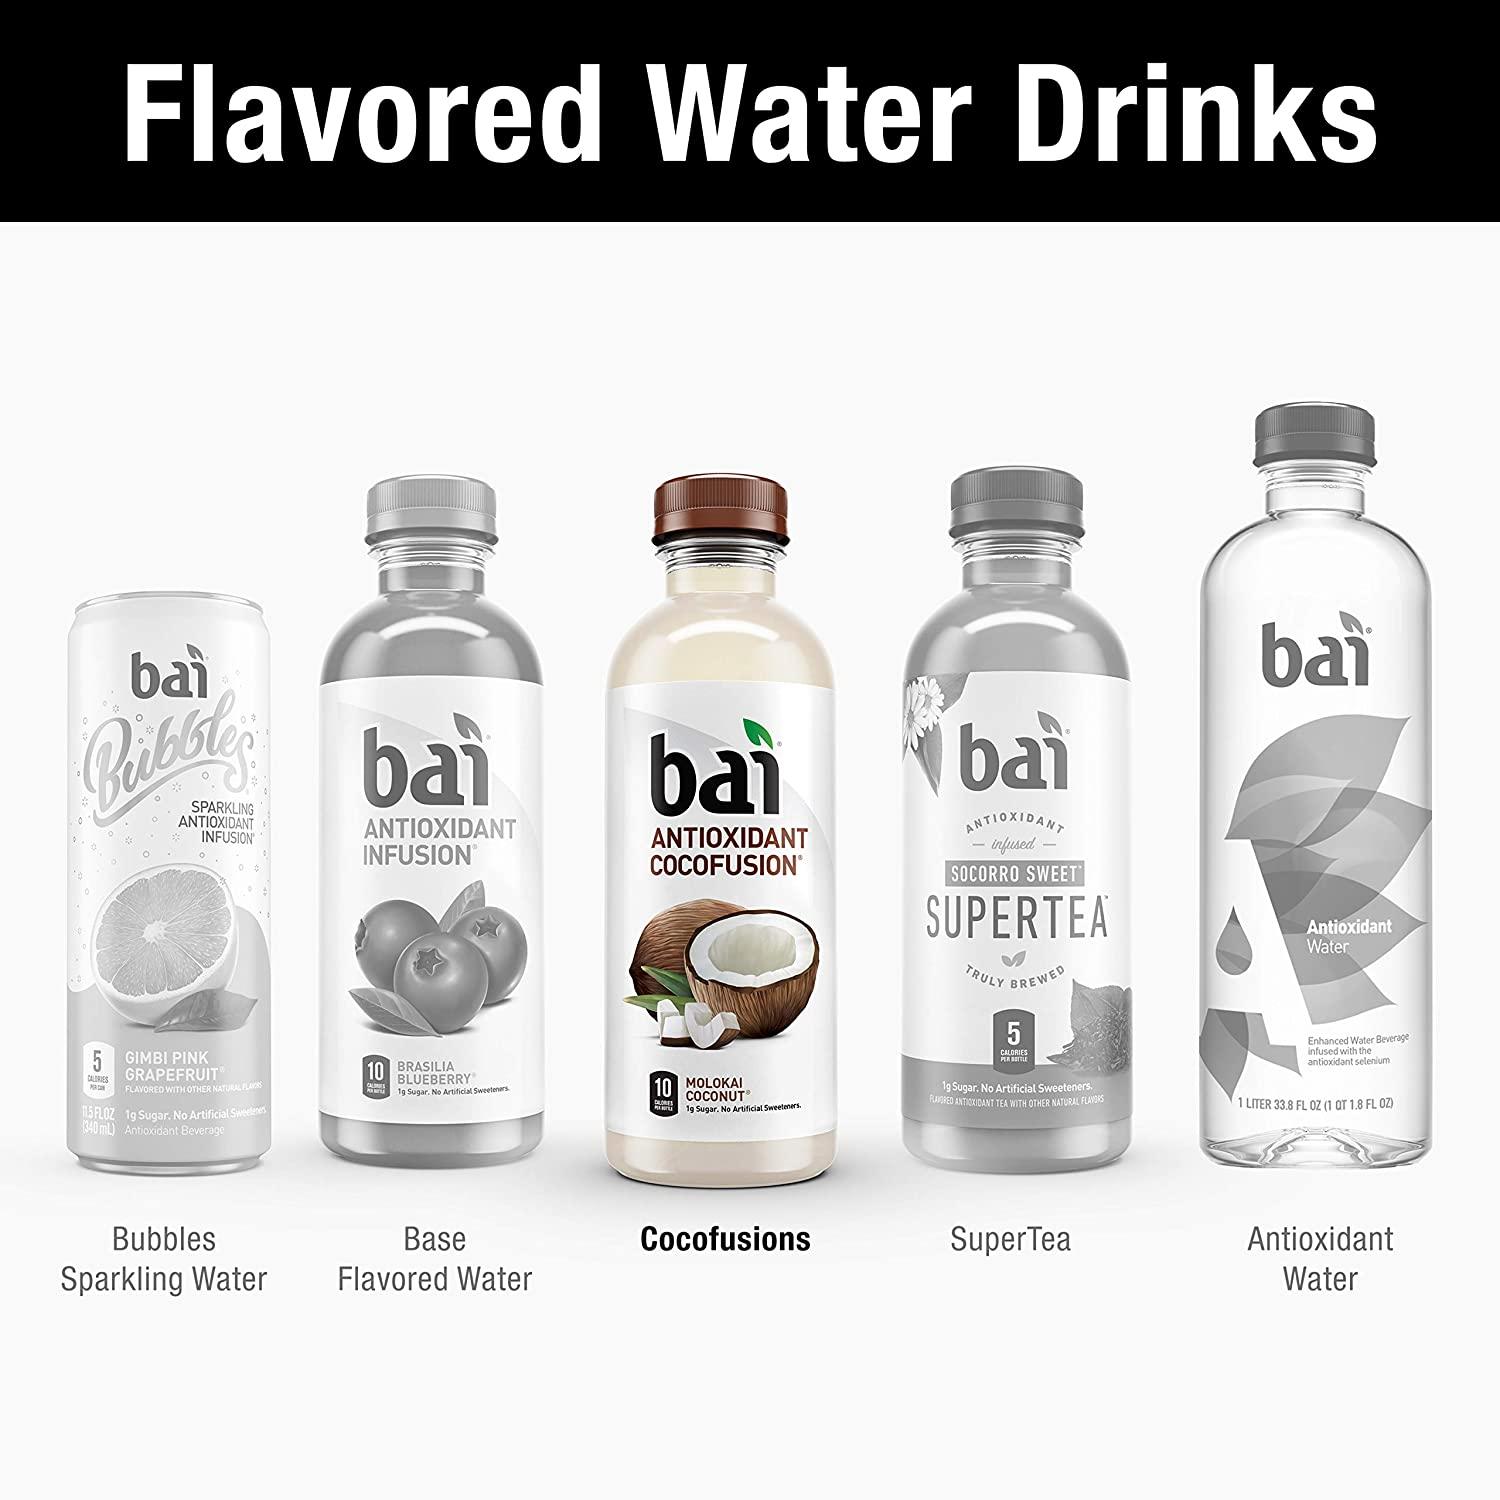 Bai 5 Antioxidant Infusions Molokai Coconut Beverage - Shop